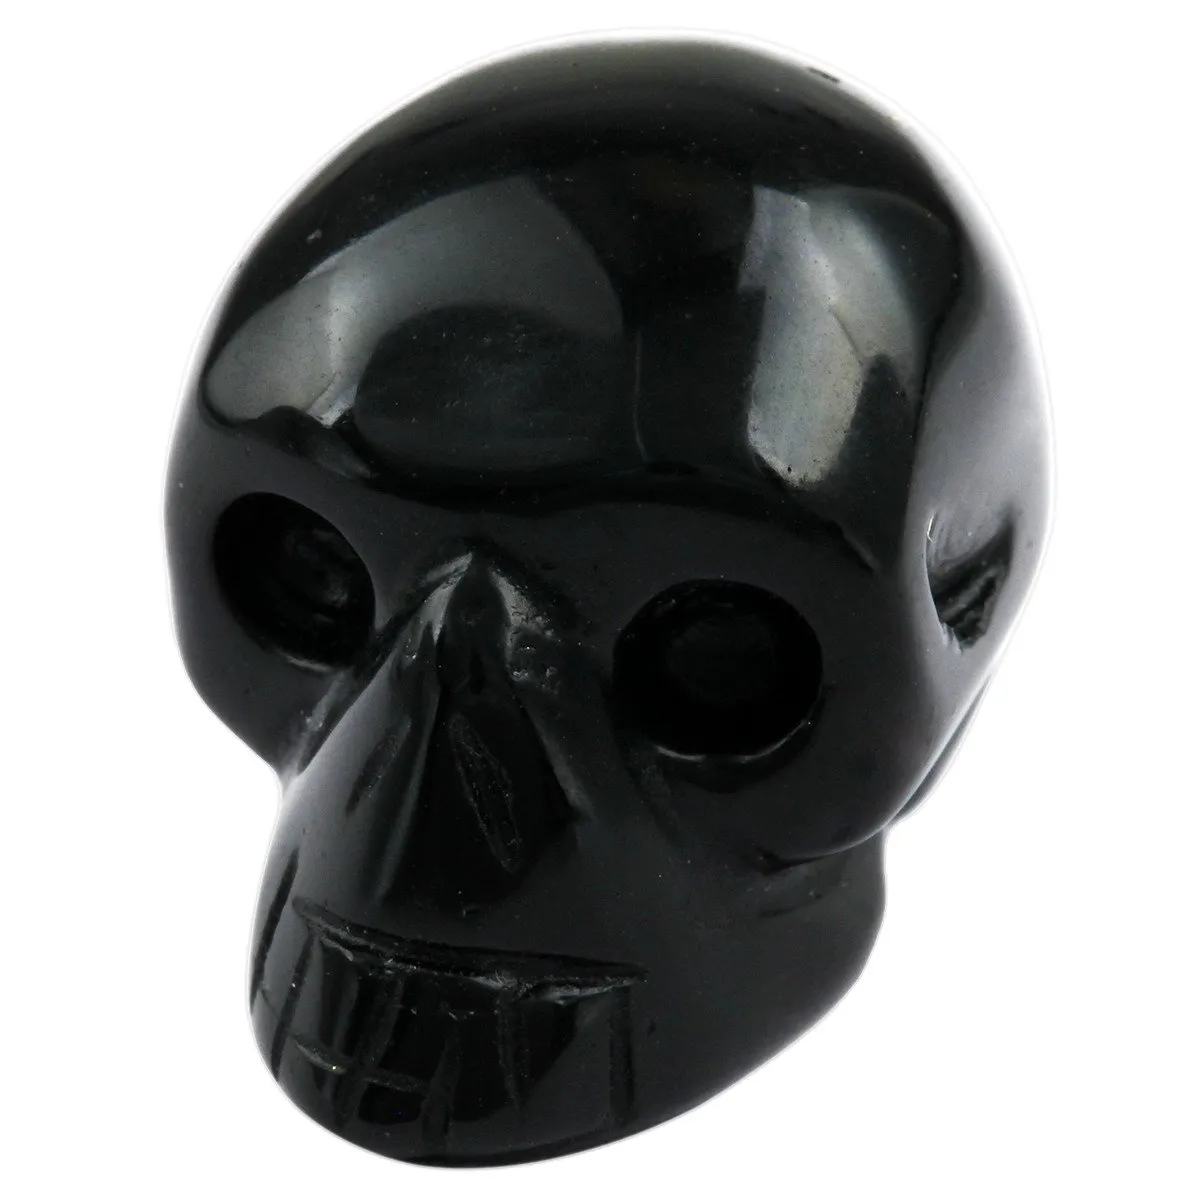 1 inch black obsidian crystal skull sculpture set of 5 hand carved gemstone statue figurine collectible healing reiki